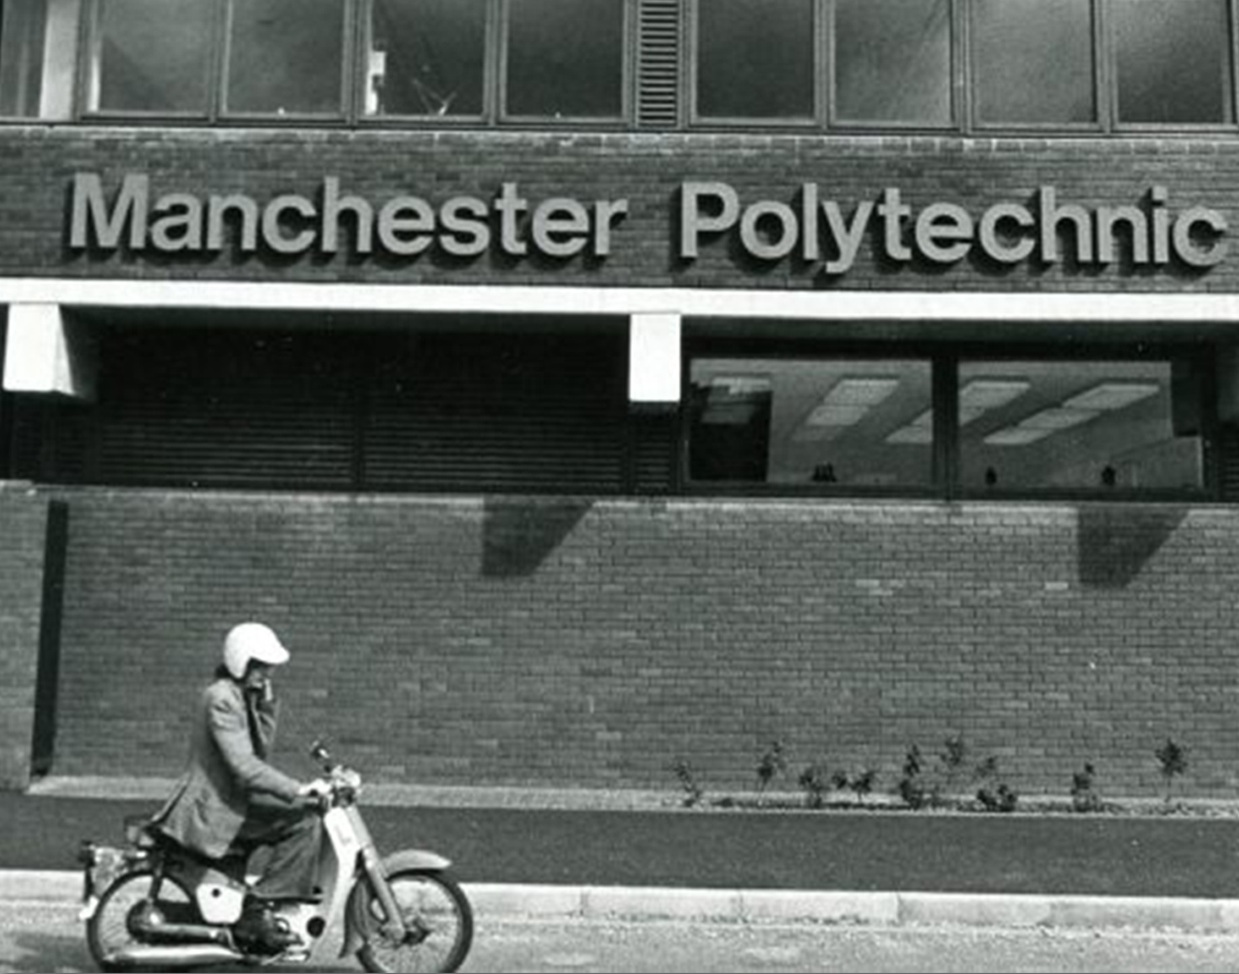 1988. Manchester Polytechnic